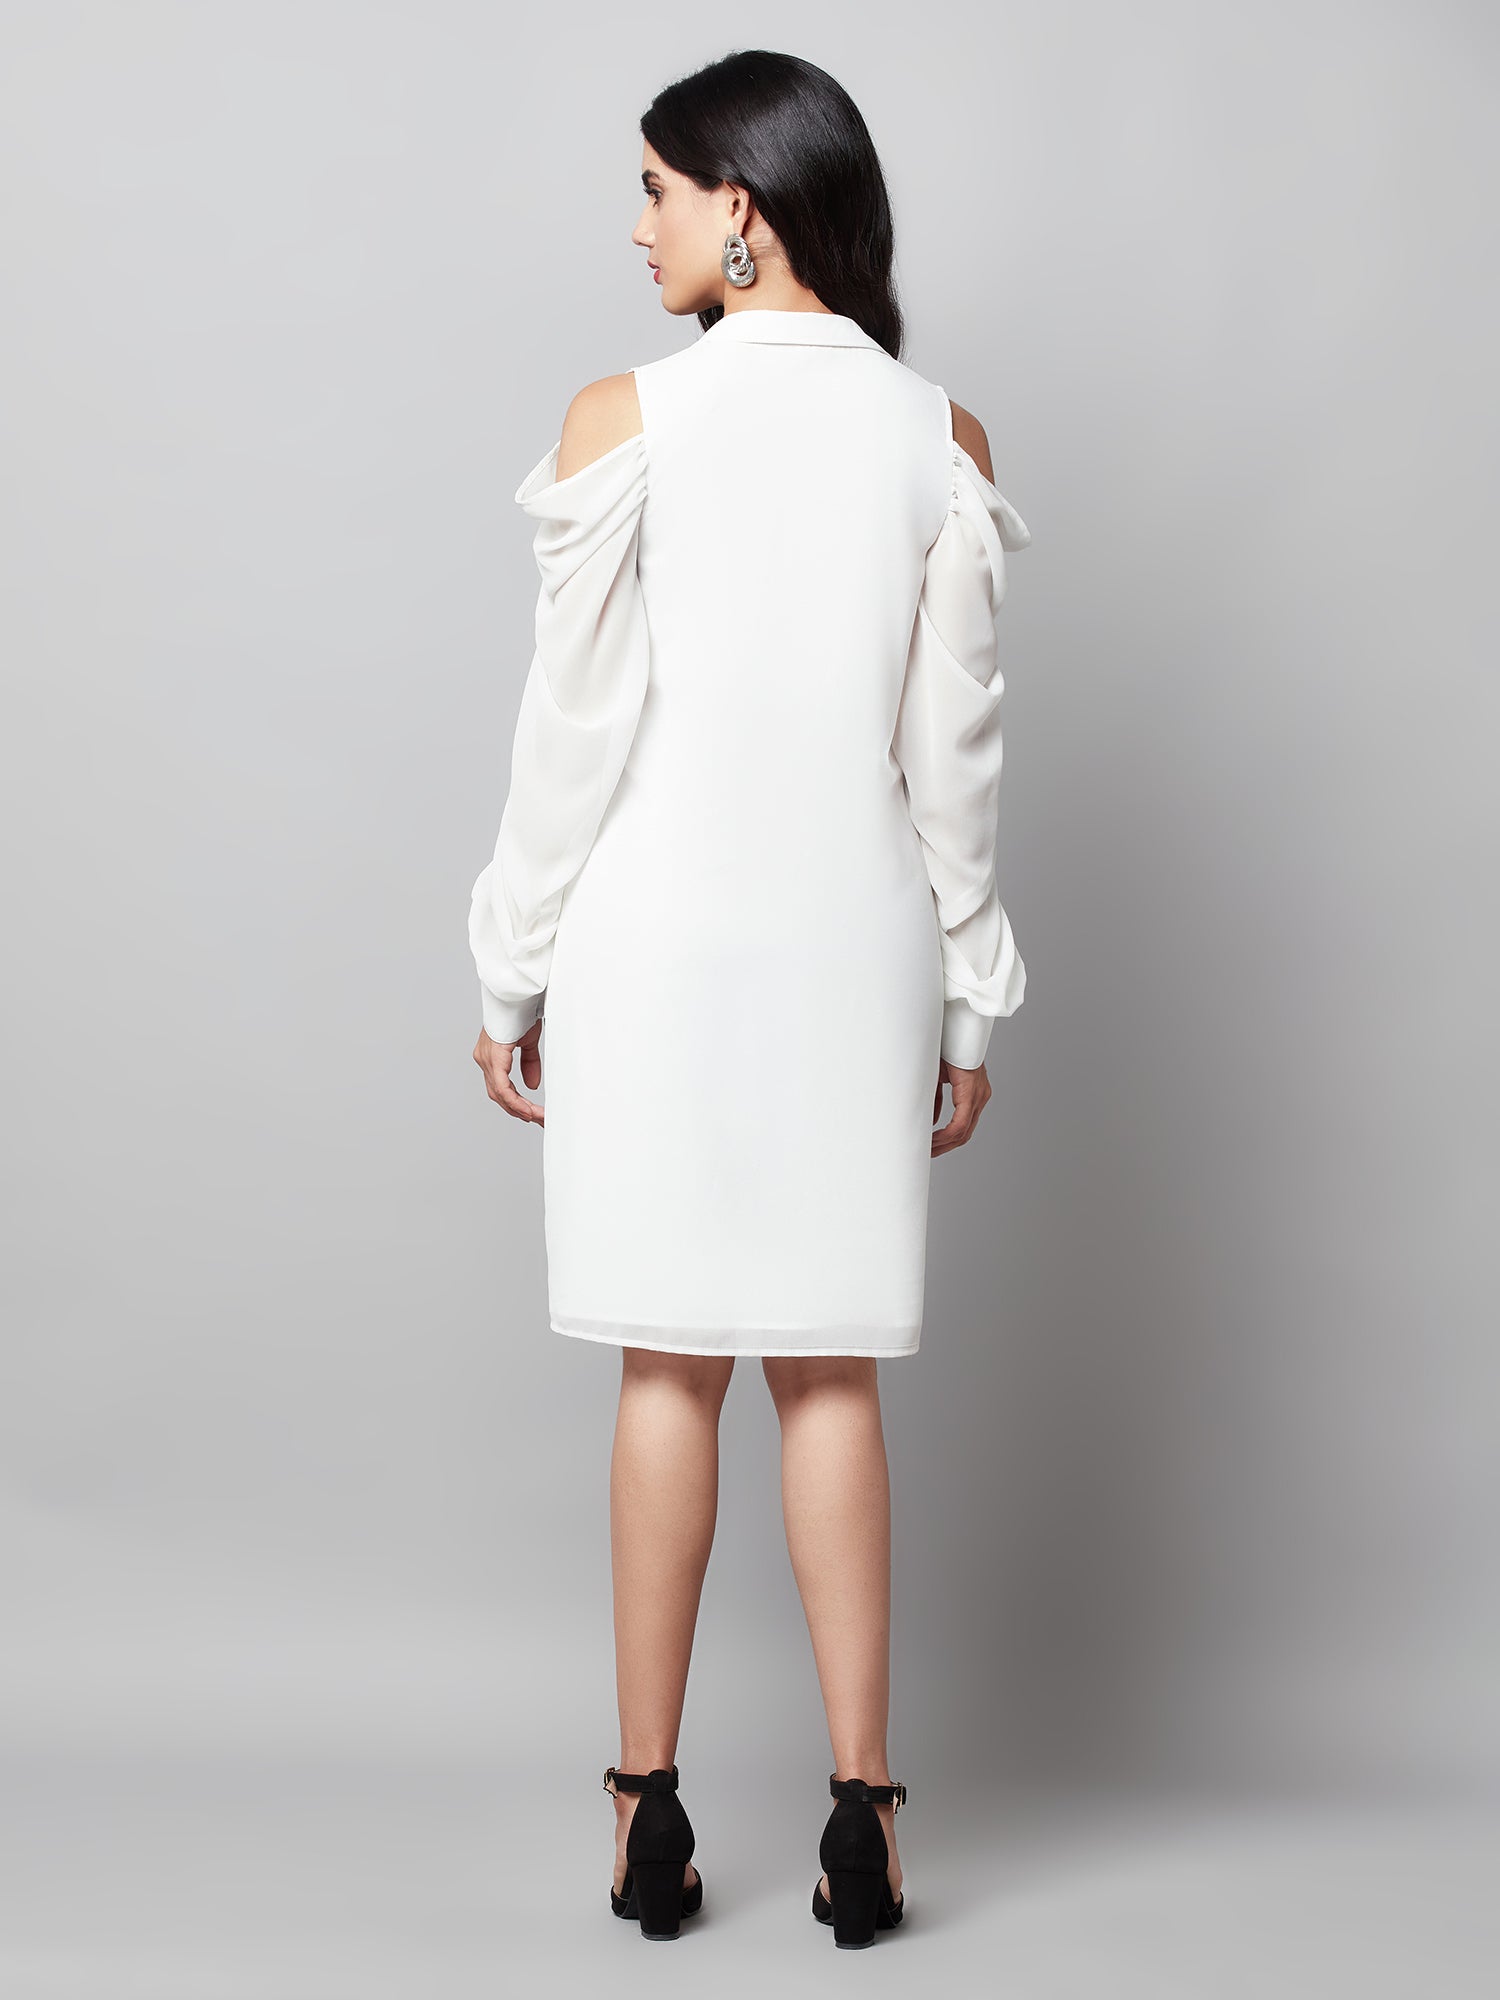 moonlit intricate white dress